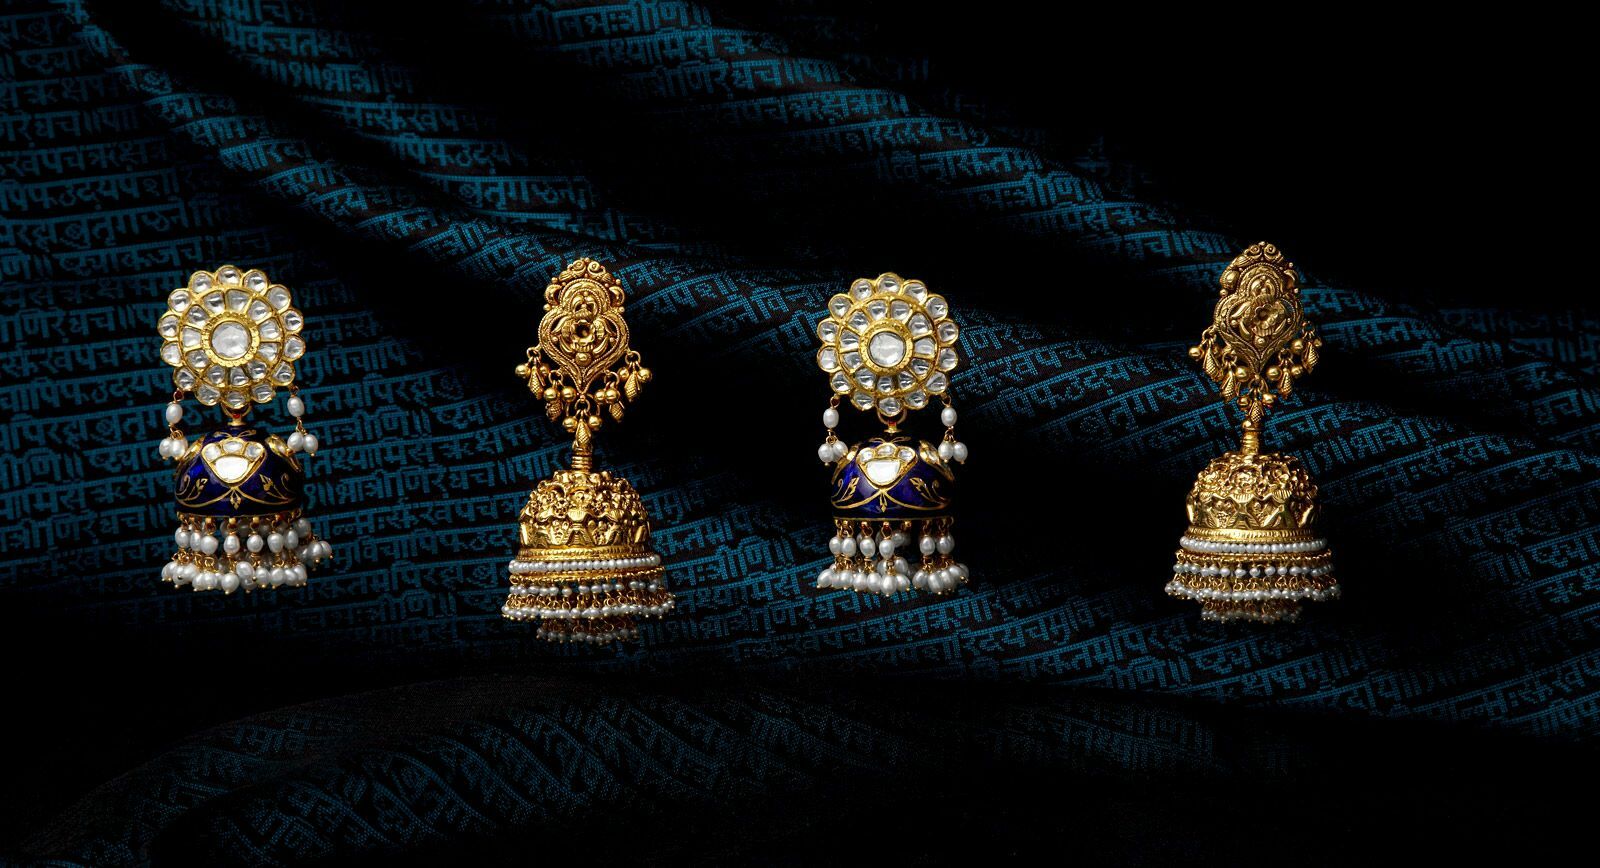 Warp’n Weft and Jaipur Gems come together to celebrate design, craftsmanship and a rich heritage